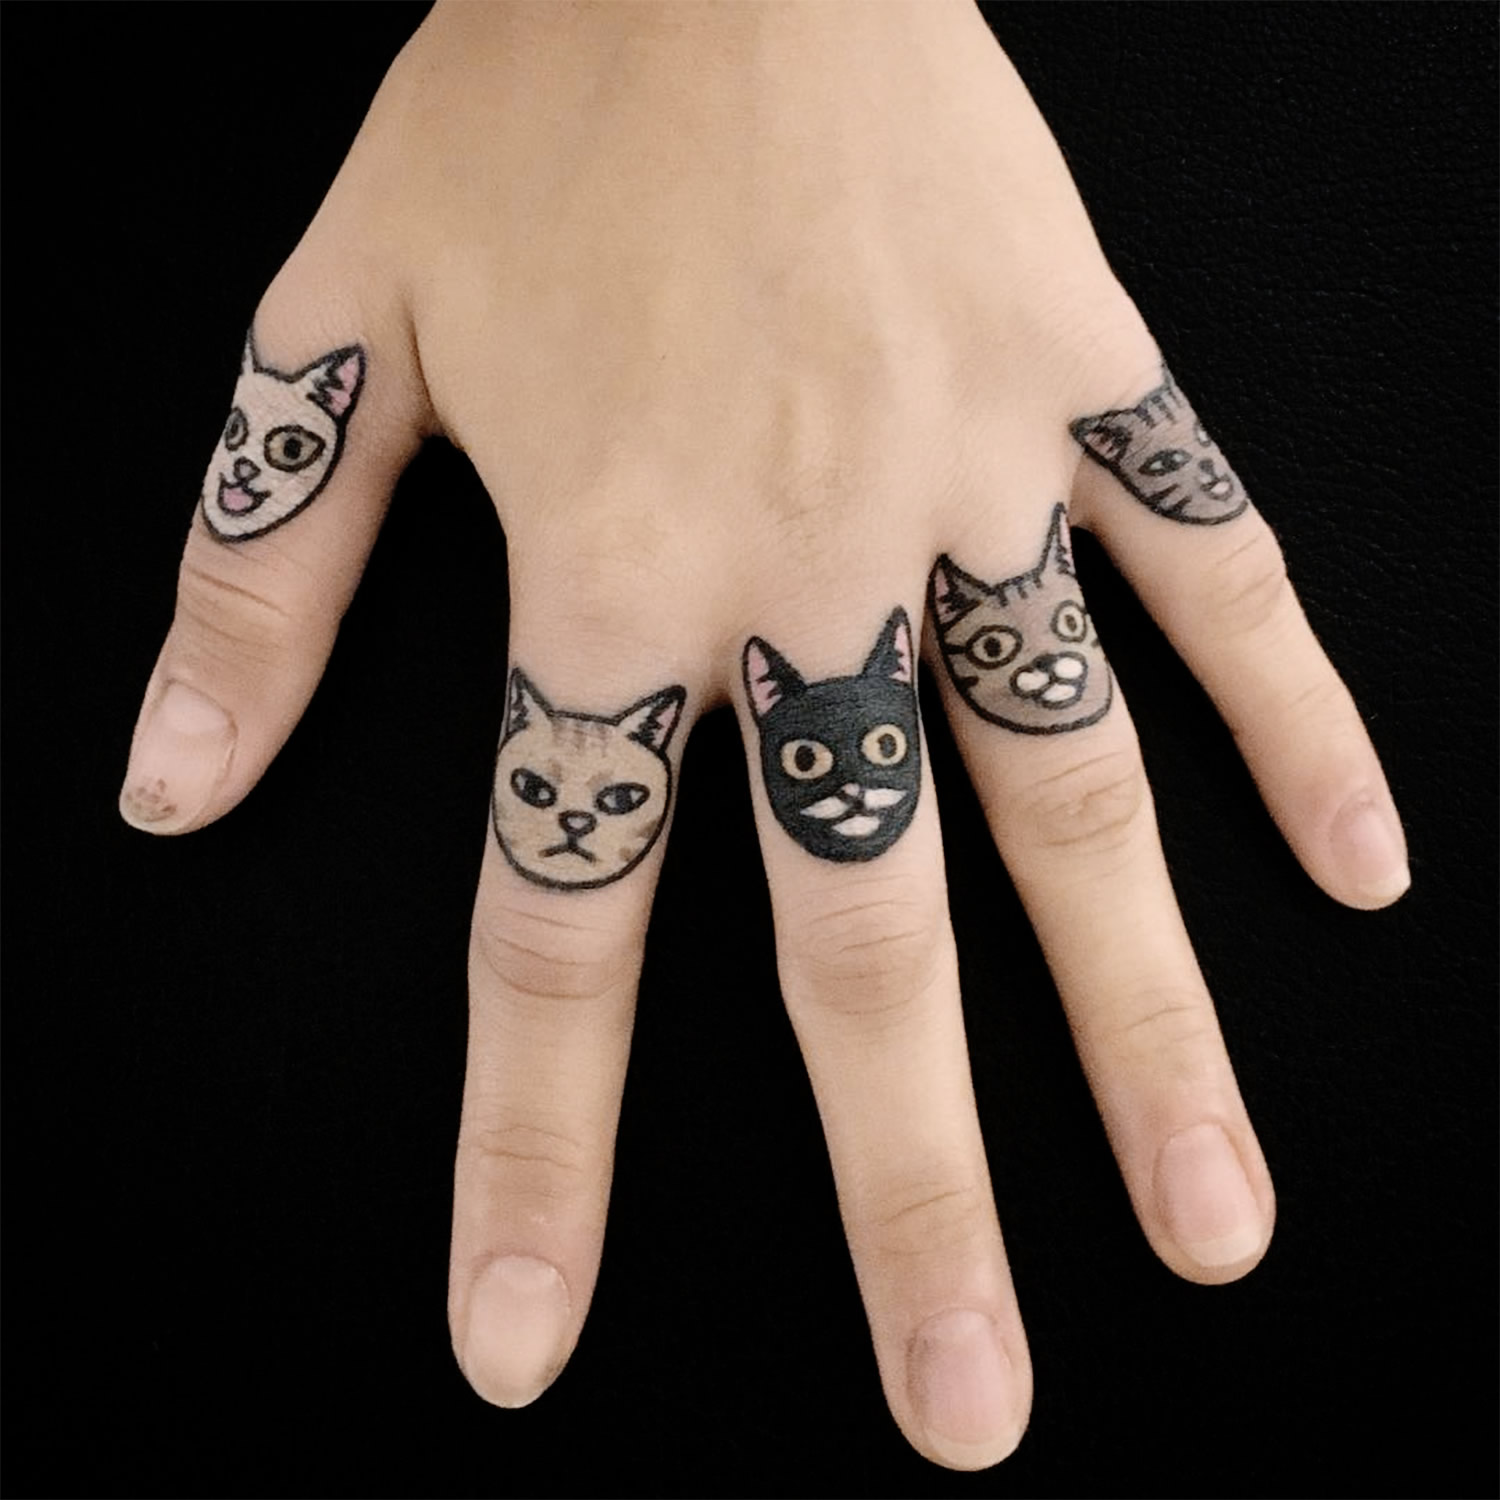 cat tattoos on each finger, hand tattoo